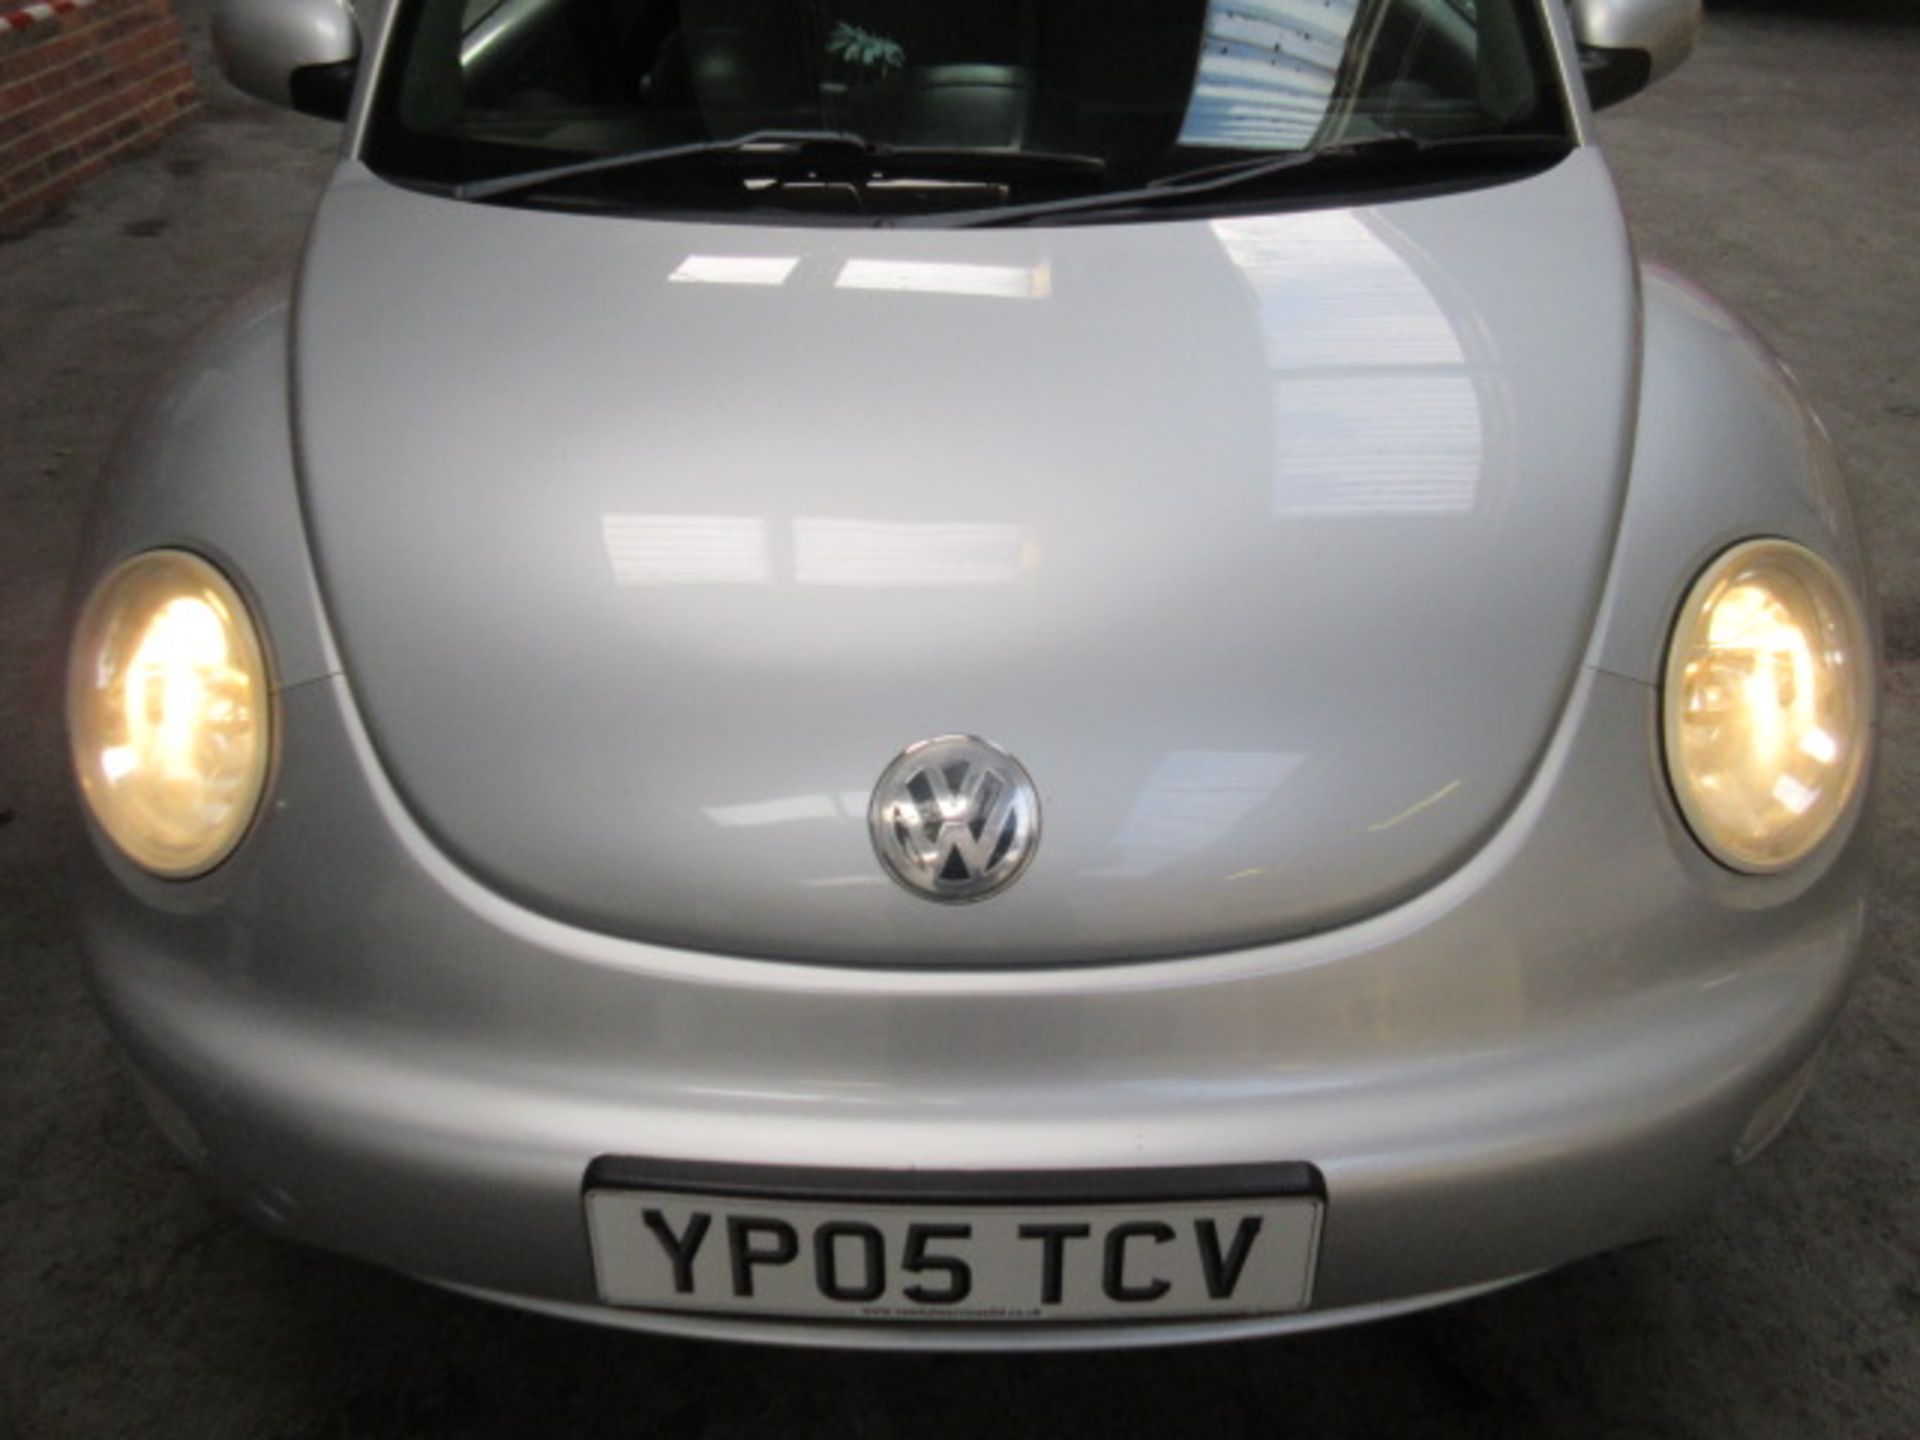 05 05 VW Beetle Cabriolet - Image 2 of 11